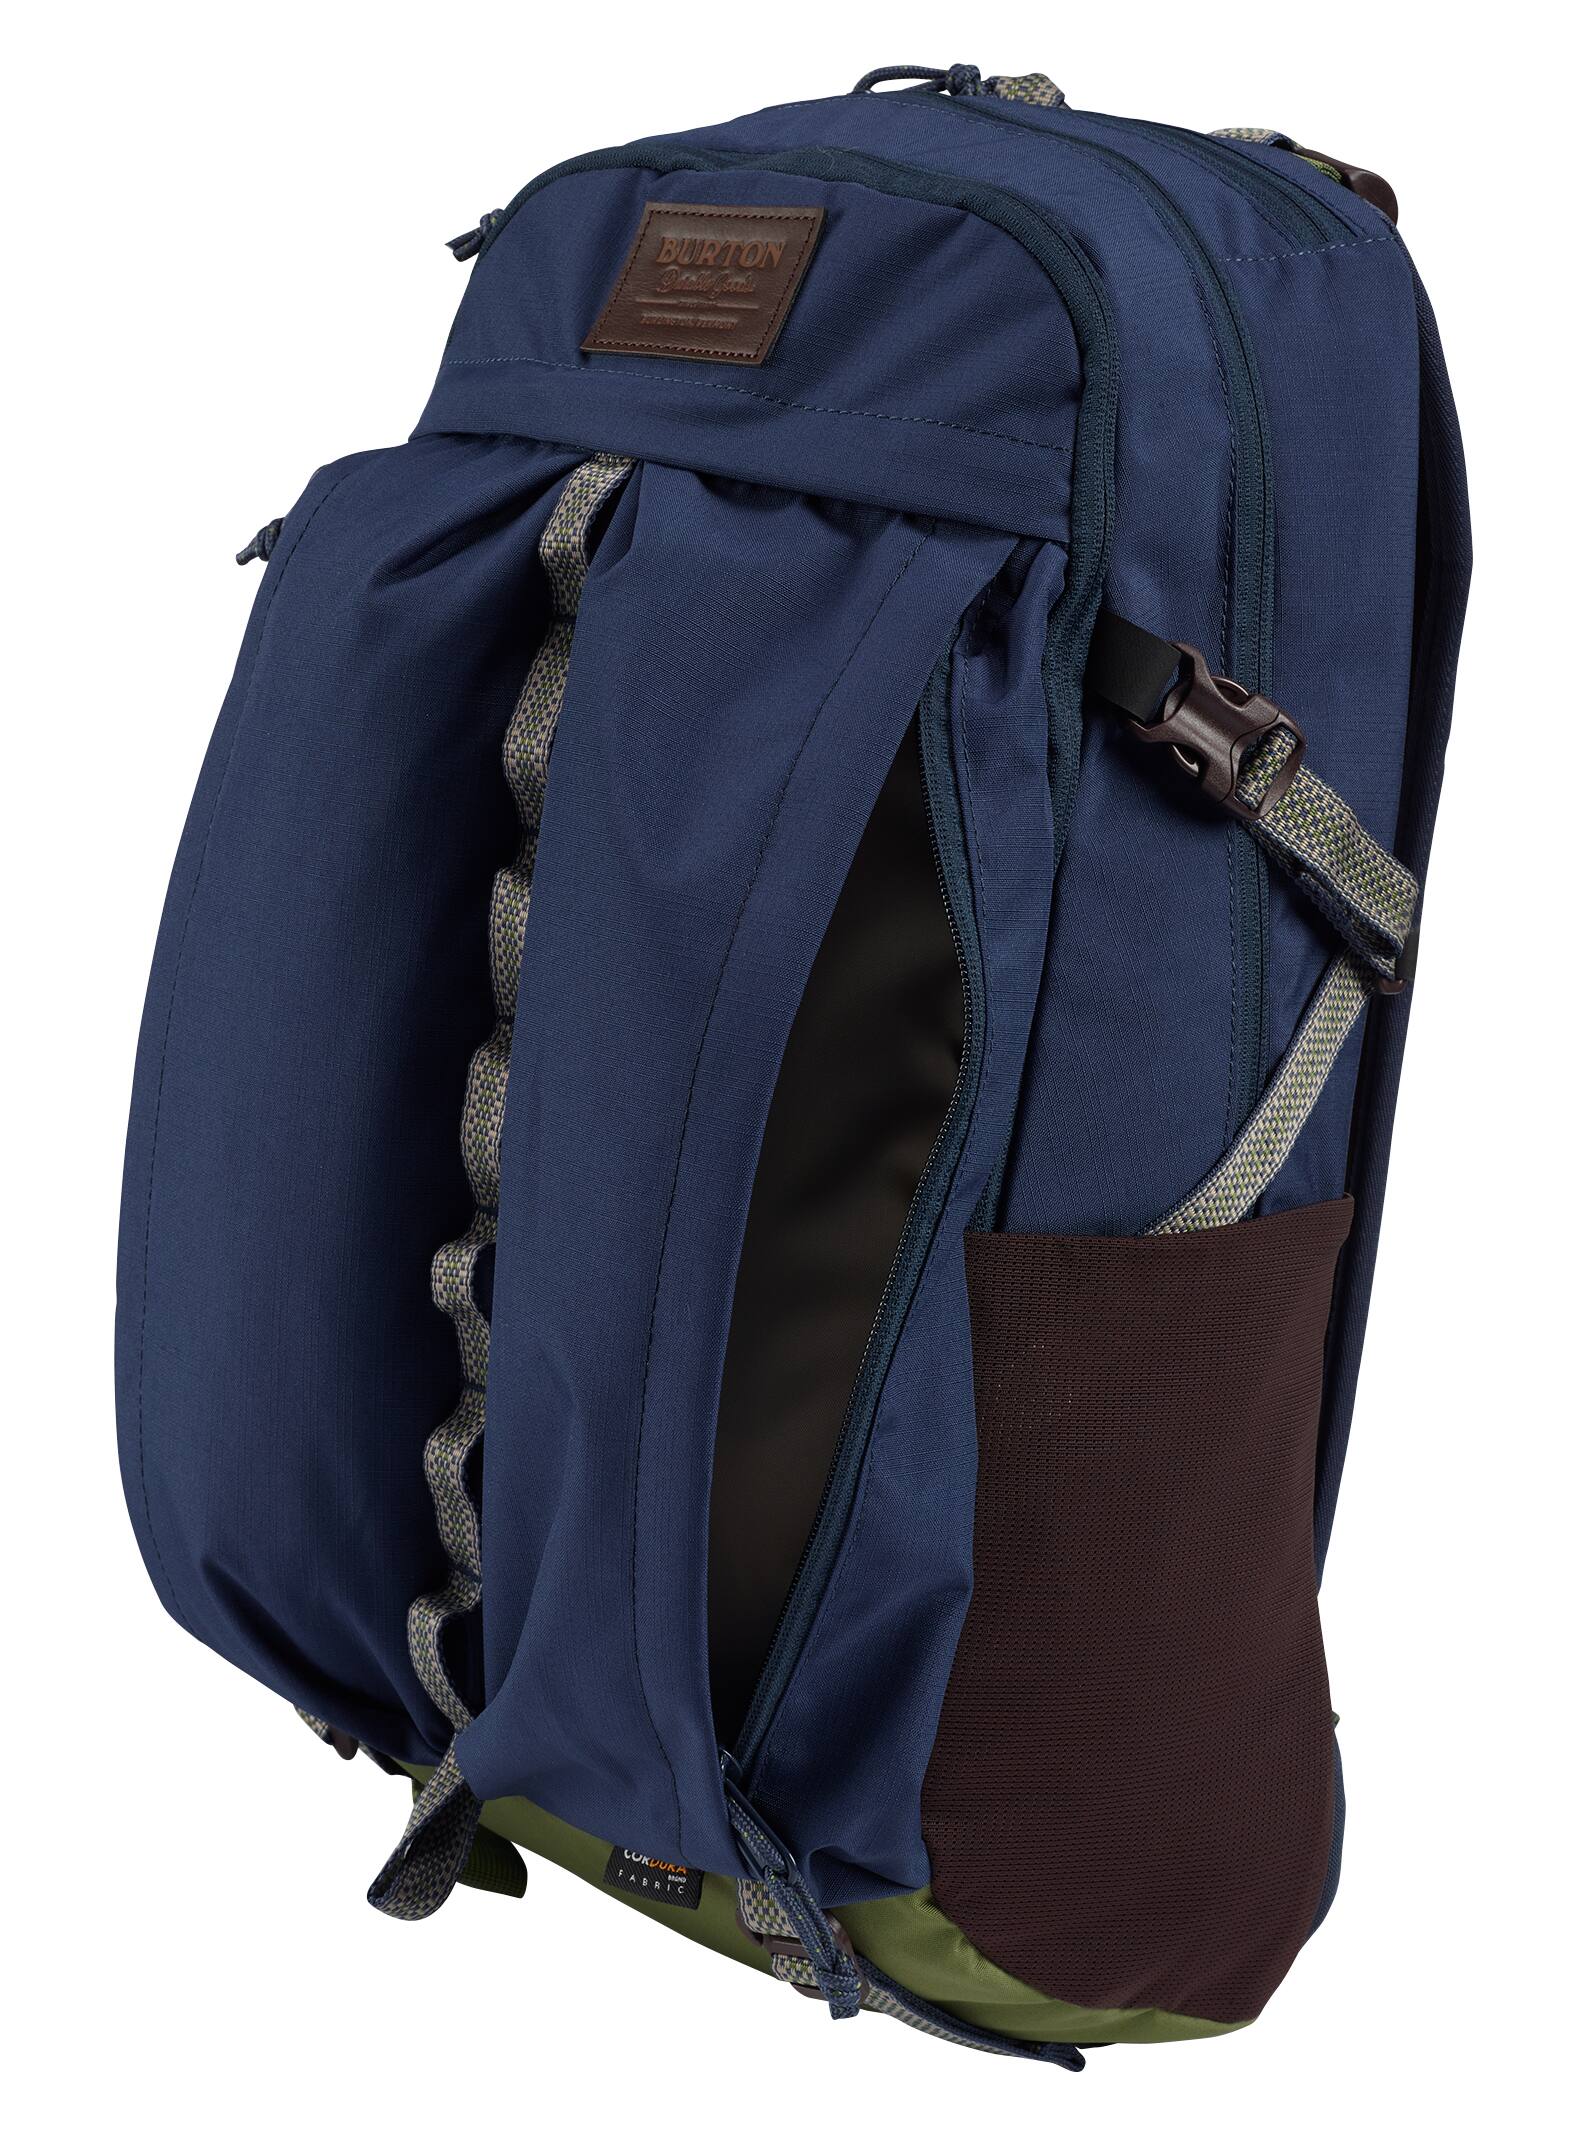 Burton Bravo Backpack | Burton.com Fall 2019 US